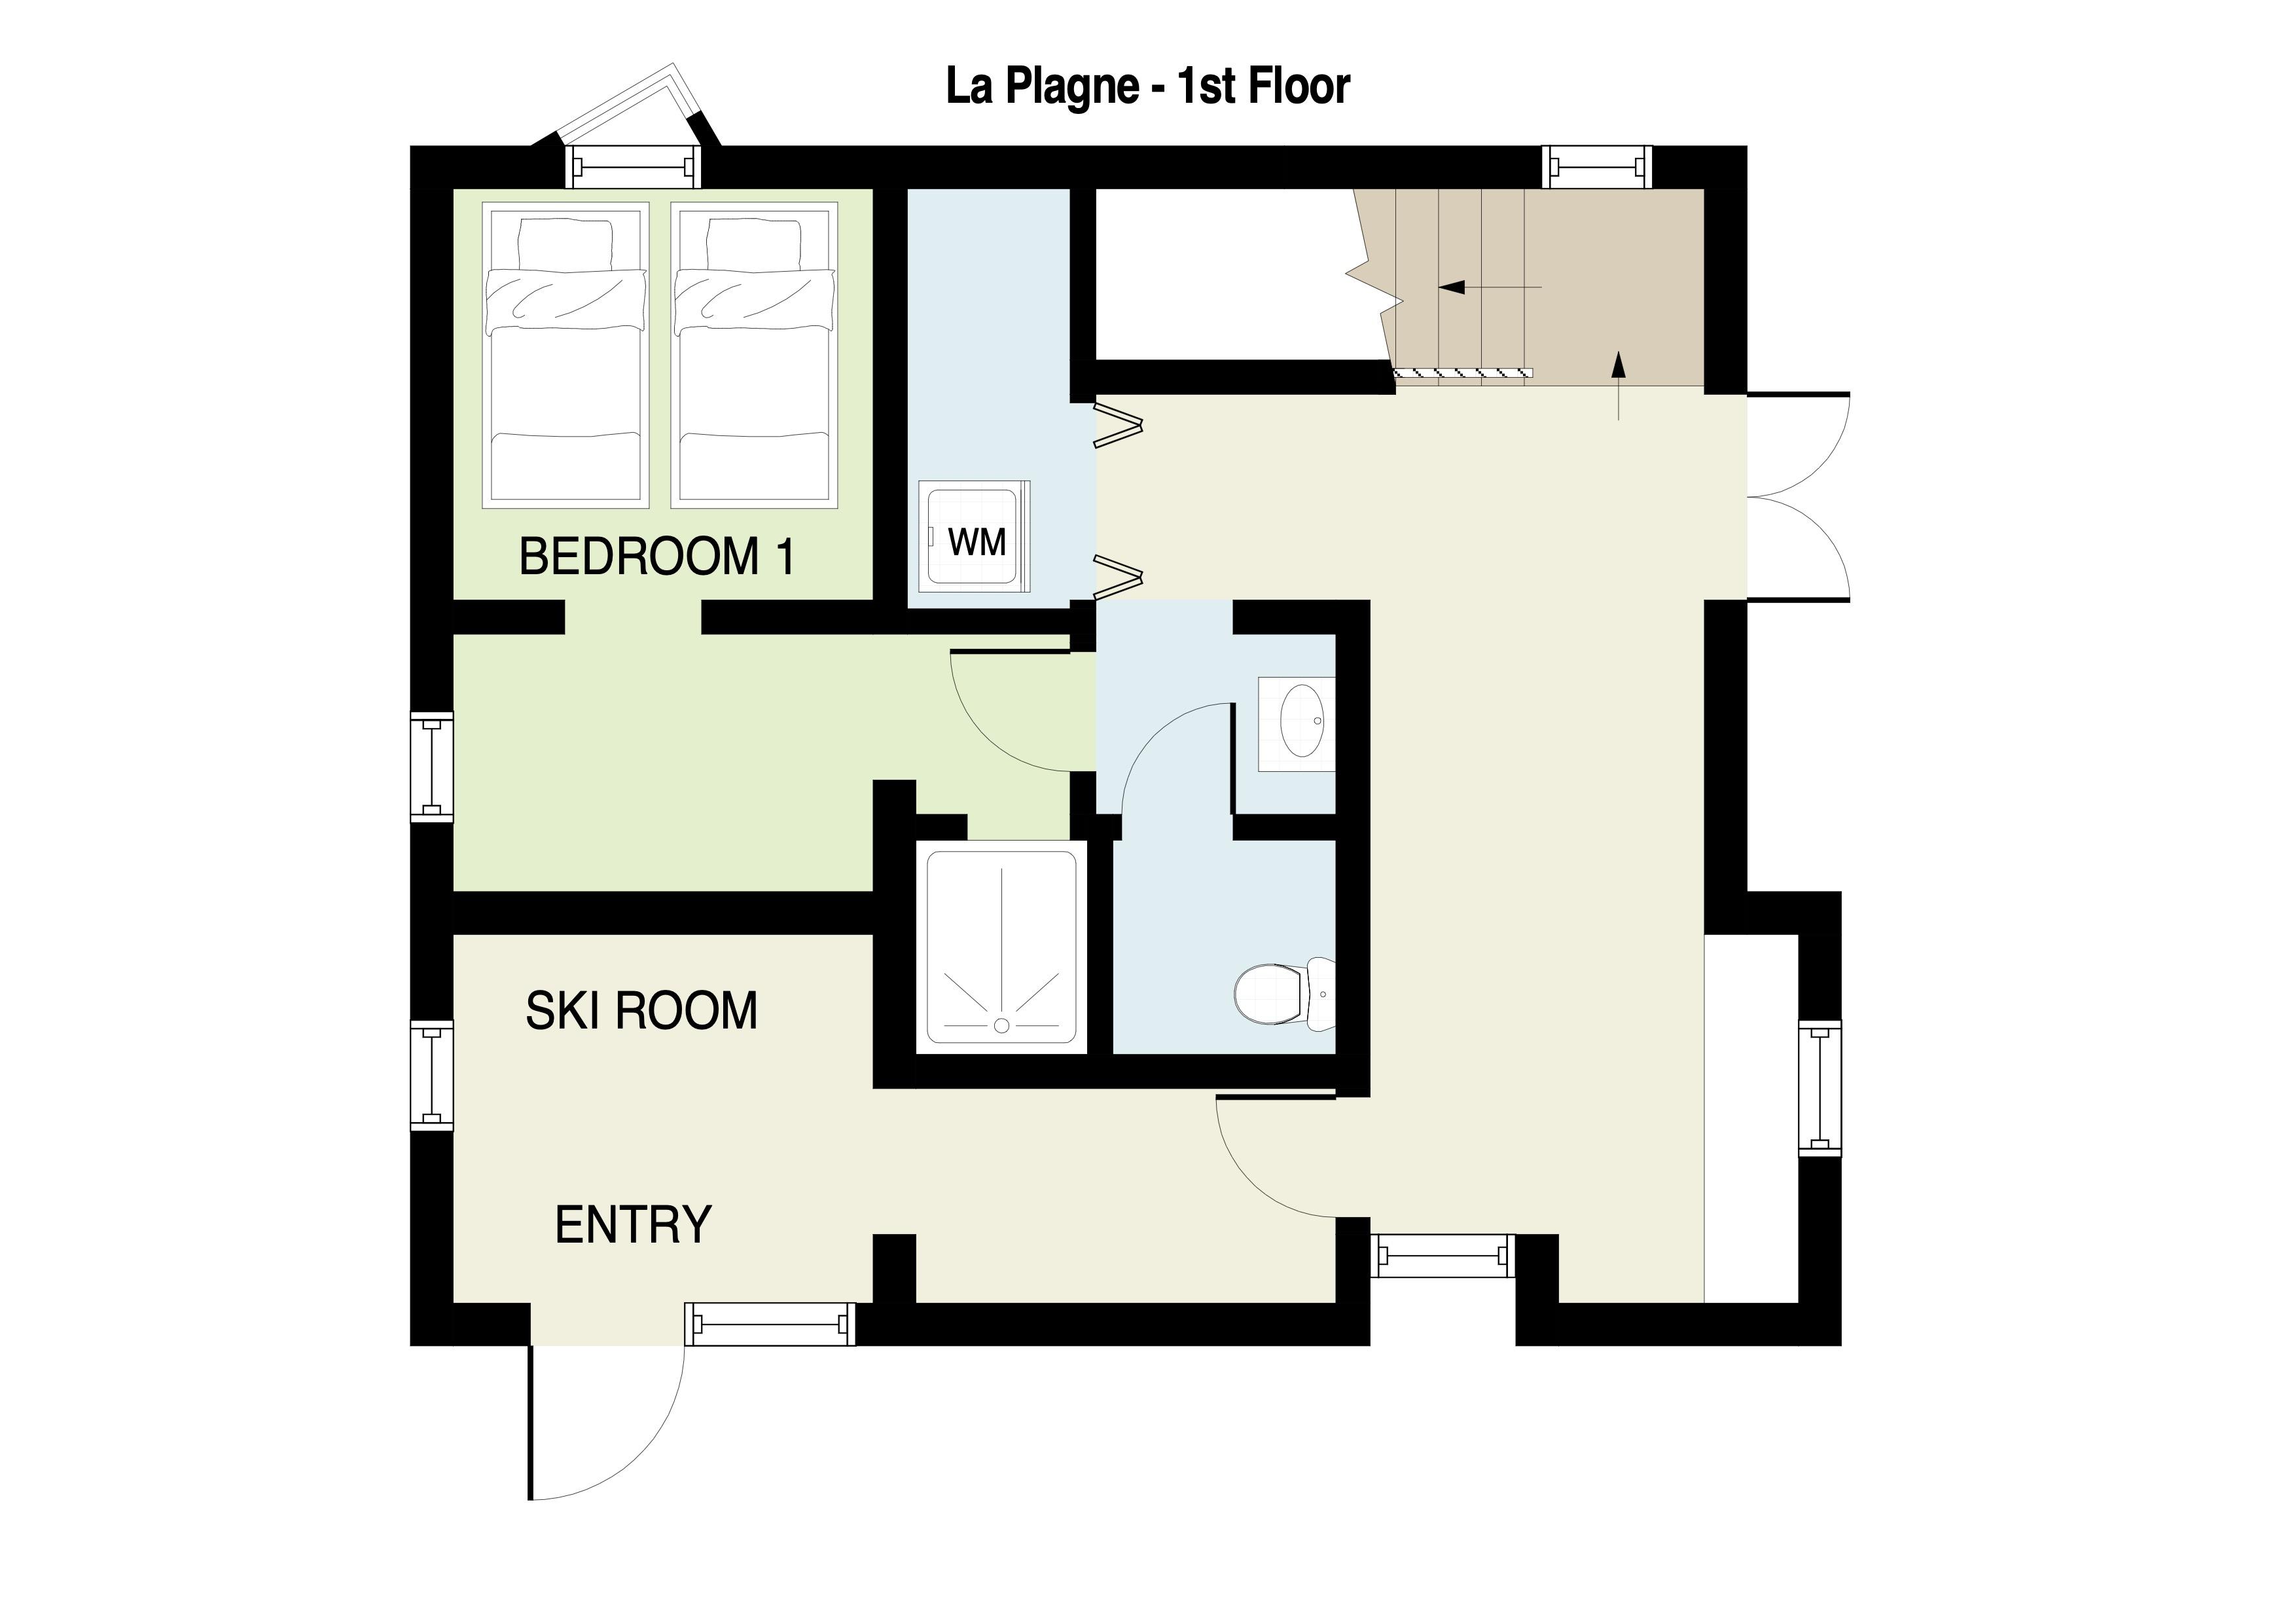 La Plagne 1st Floor Plan